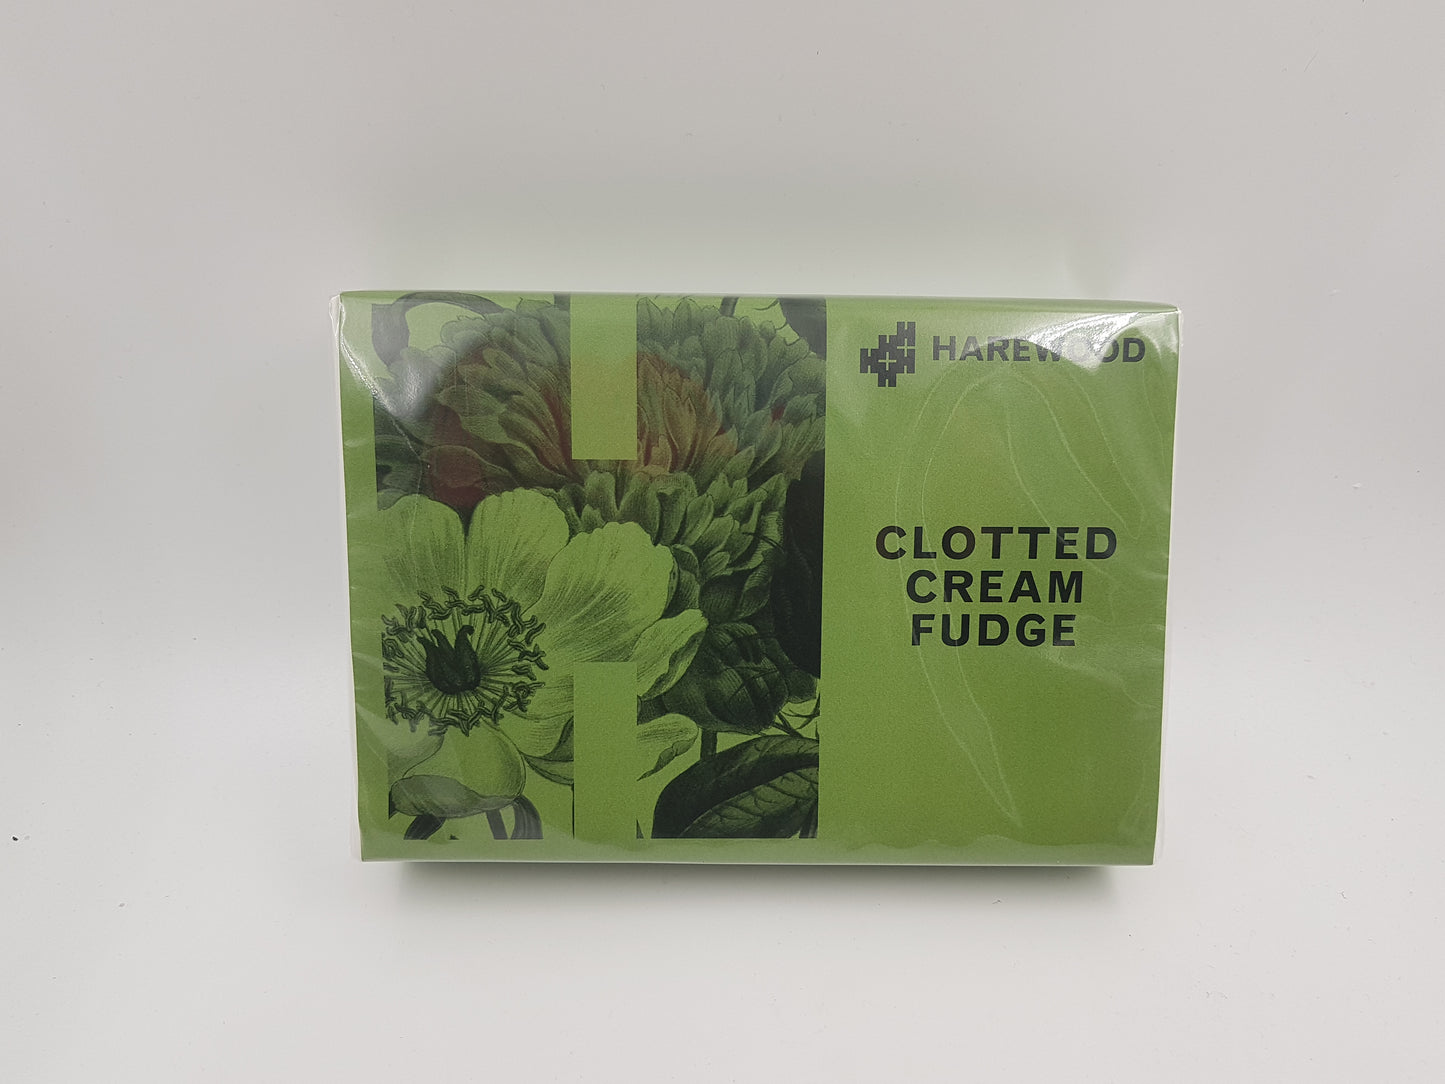 Harewood Clotted Cream Fudge Box 150g